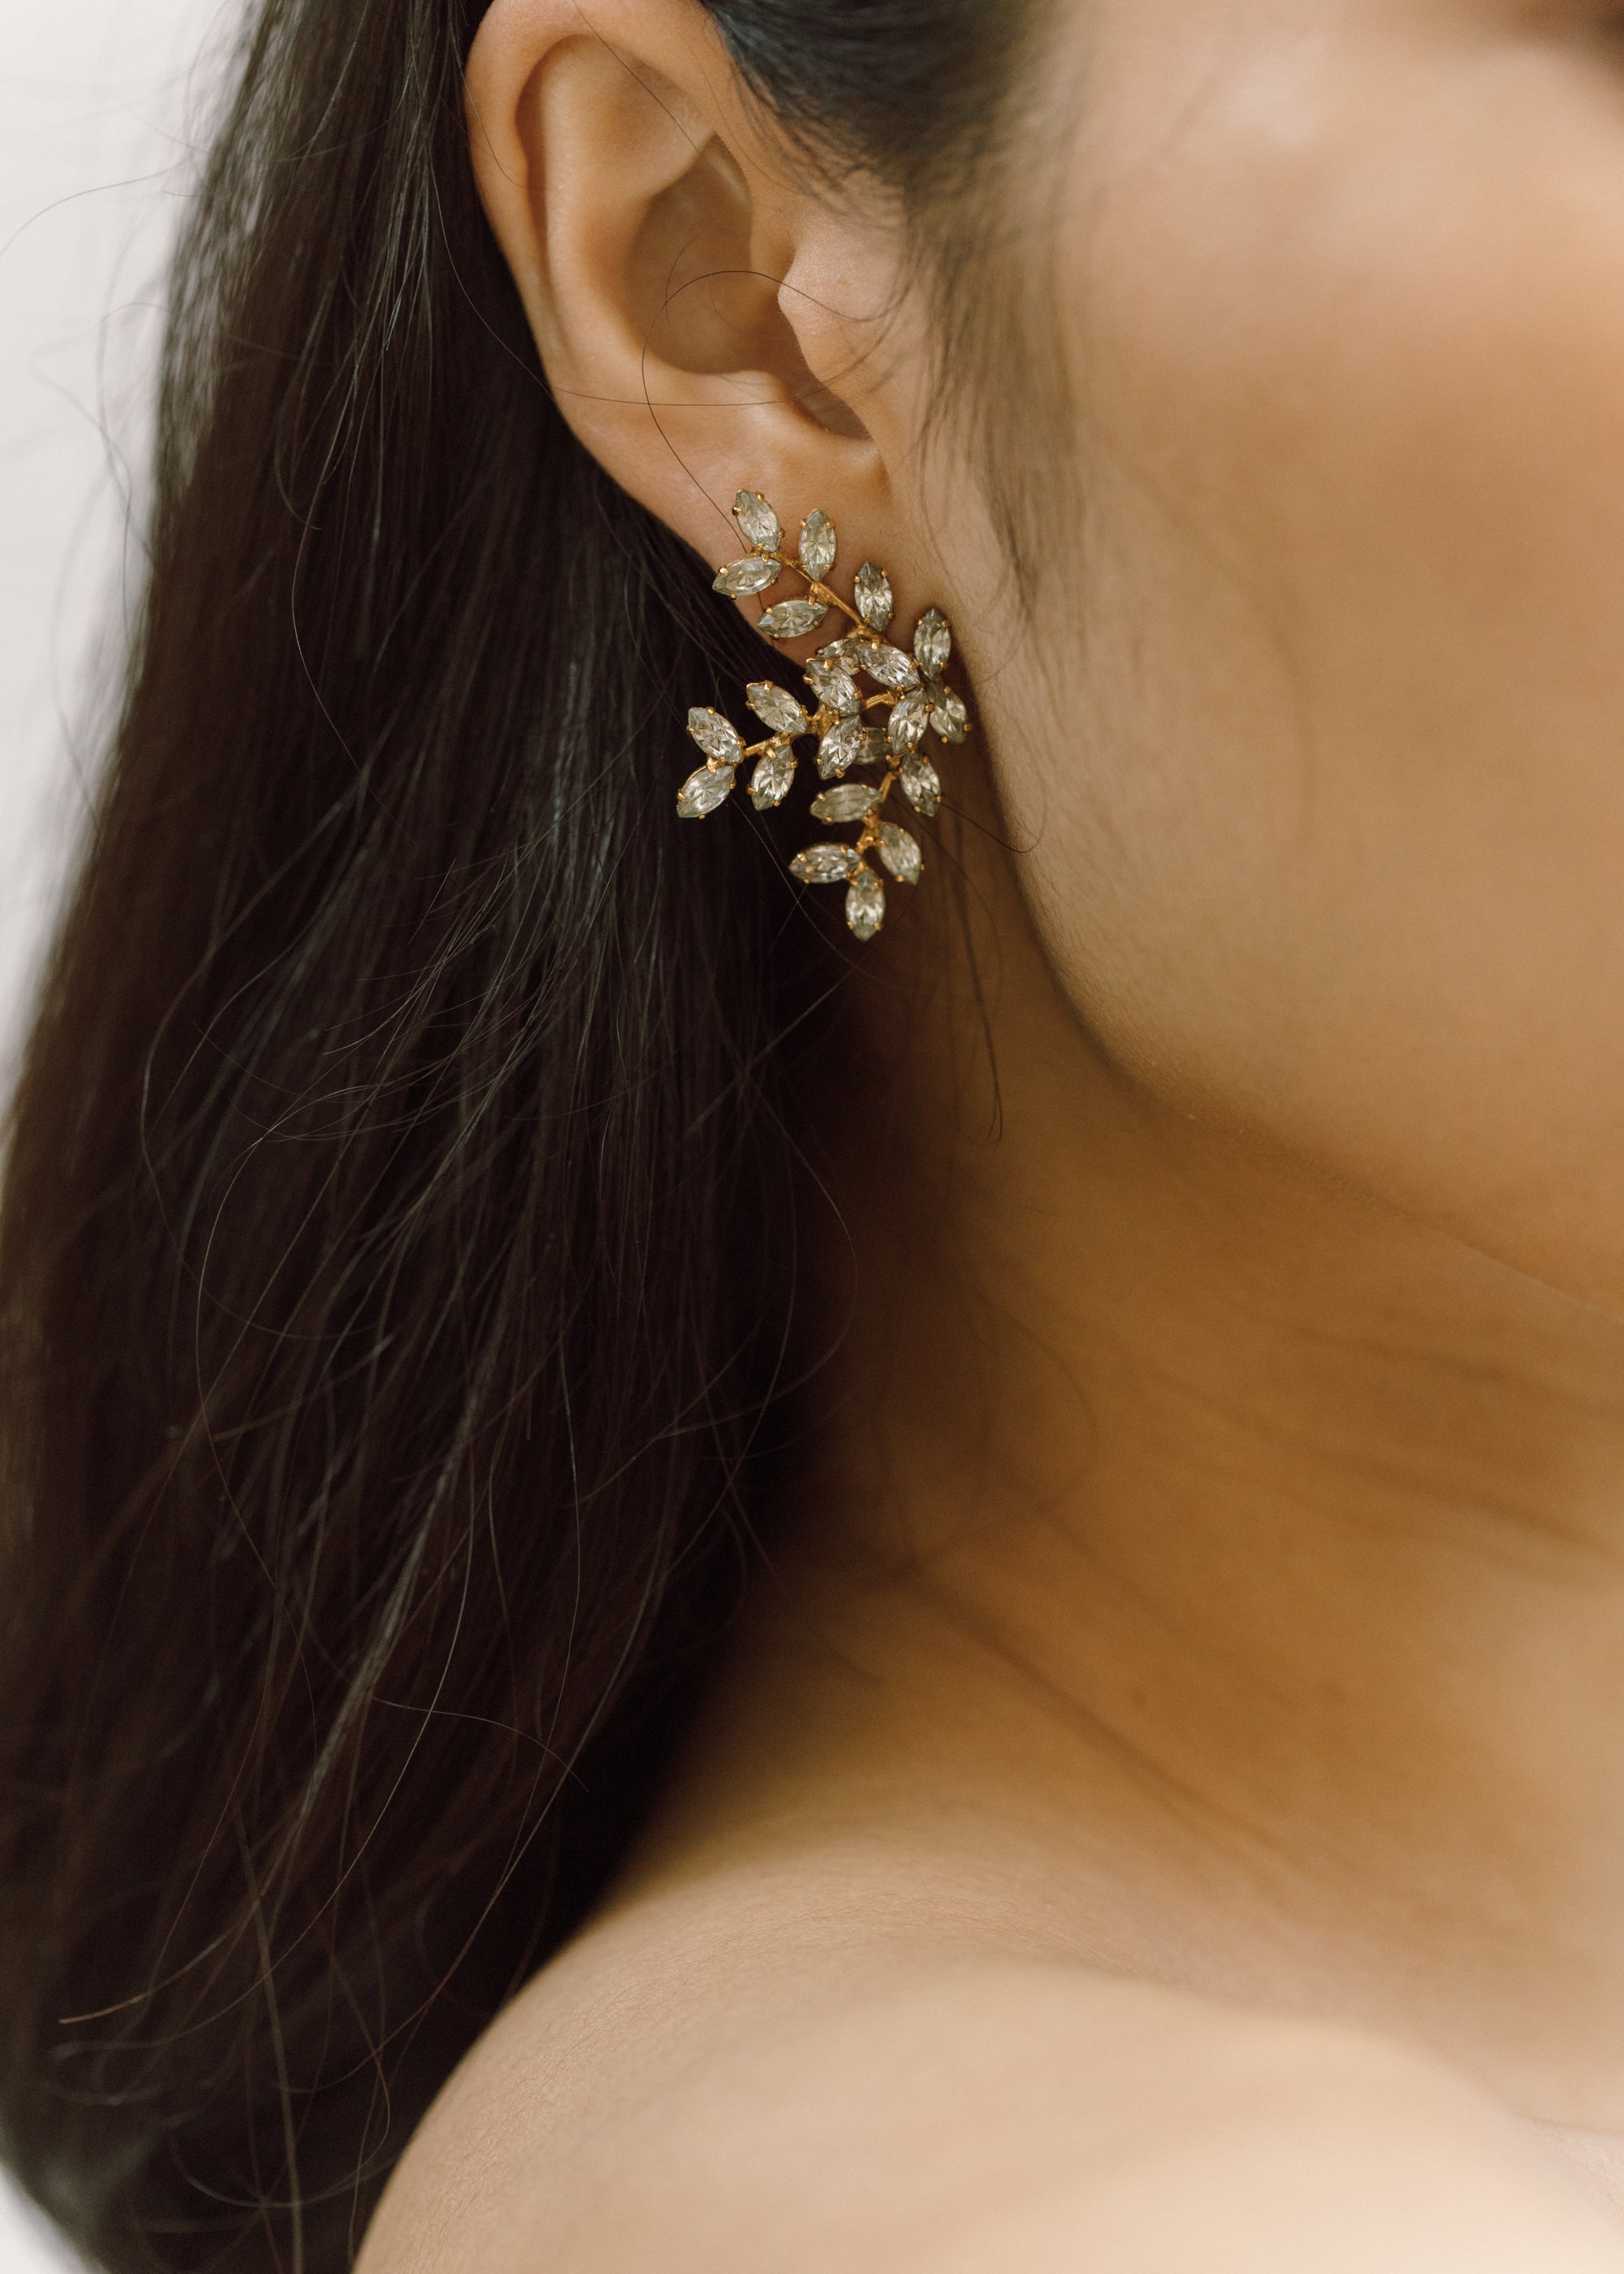 Buy Dull Gold Bahubali Earrings/ Indian Jewelry/ Bollywood Jewelry/  Jhumkas/ Indian Earrings/ Gold Earrings/ Devsena Earrings/ Sahare/ Dangling  Online in India - Etsy